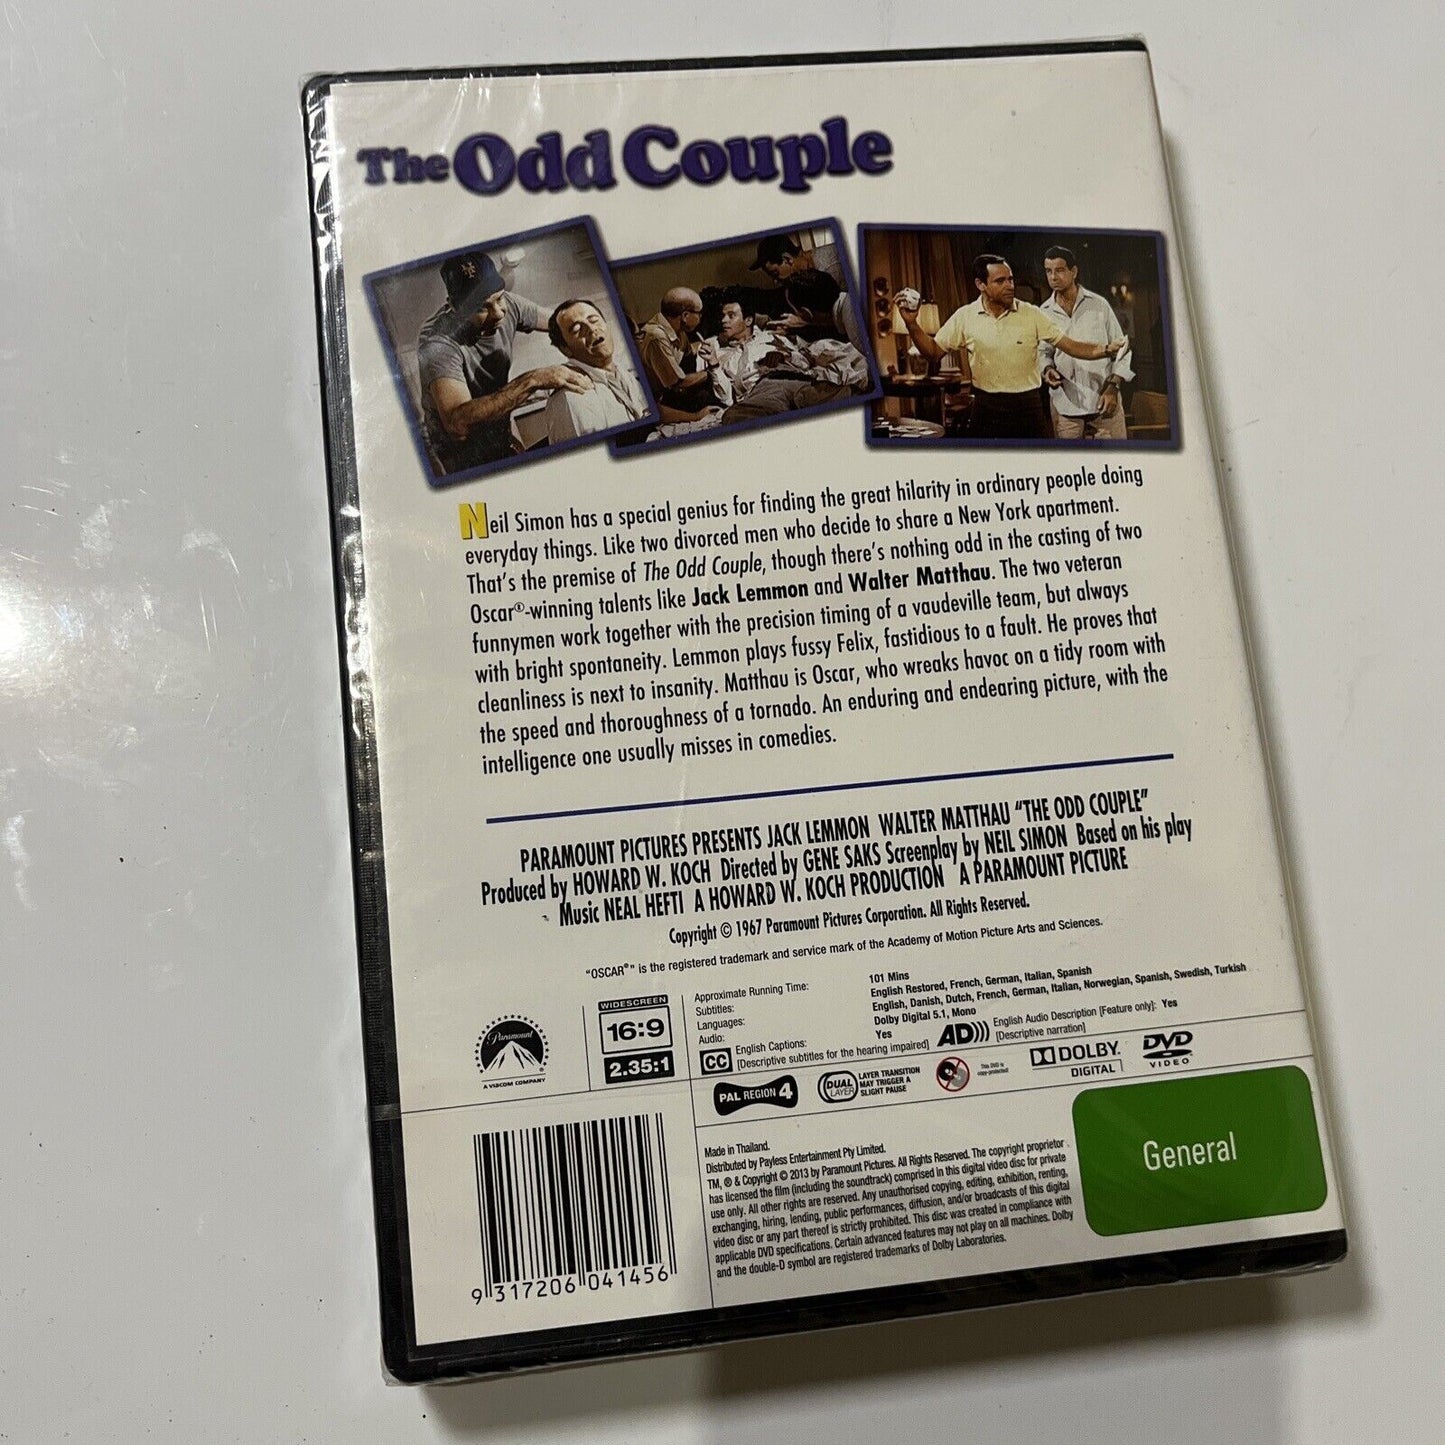 *New Sealed* The Odd Couple (DVD, 1967) Jack Lemmon, Walter Matthau. Region 4